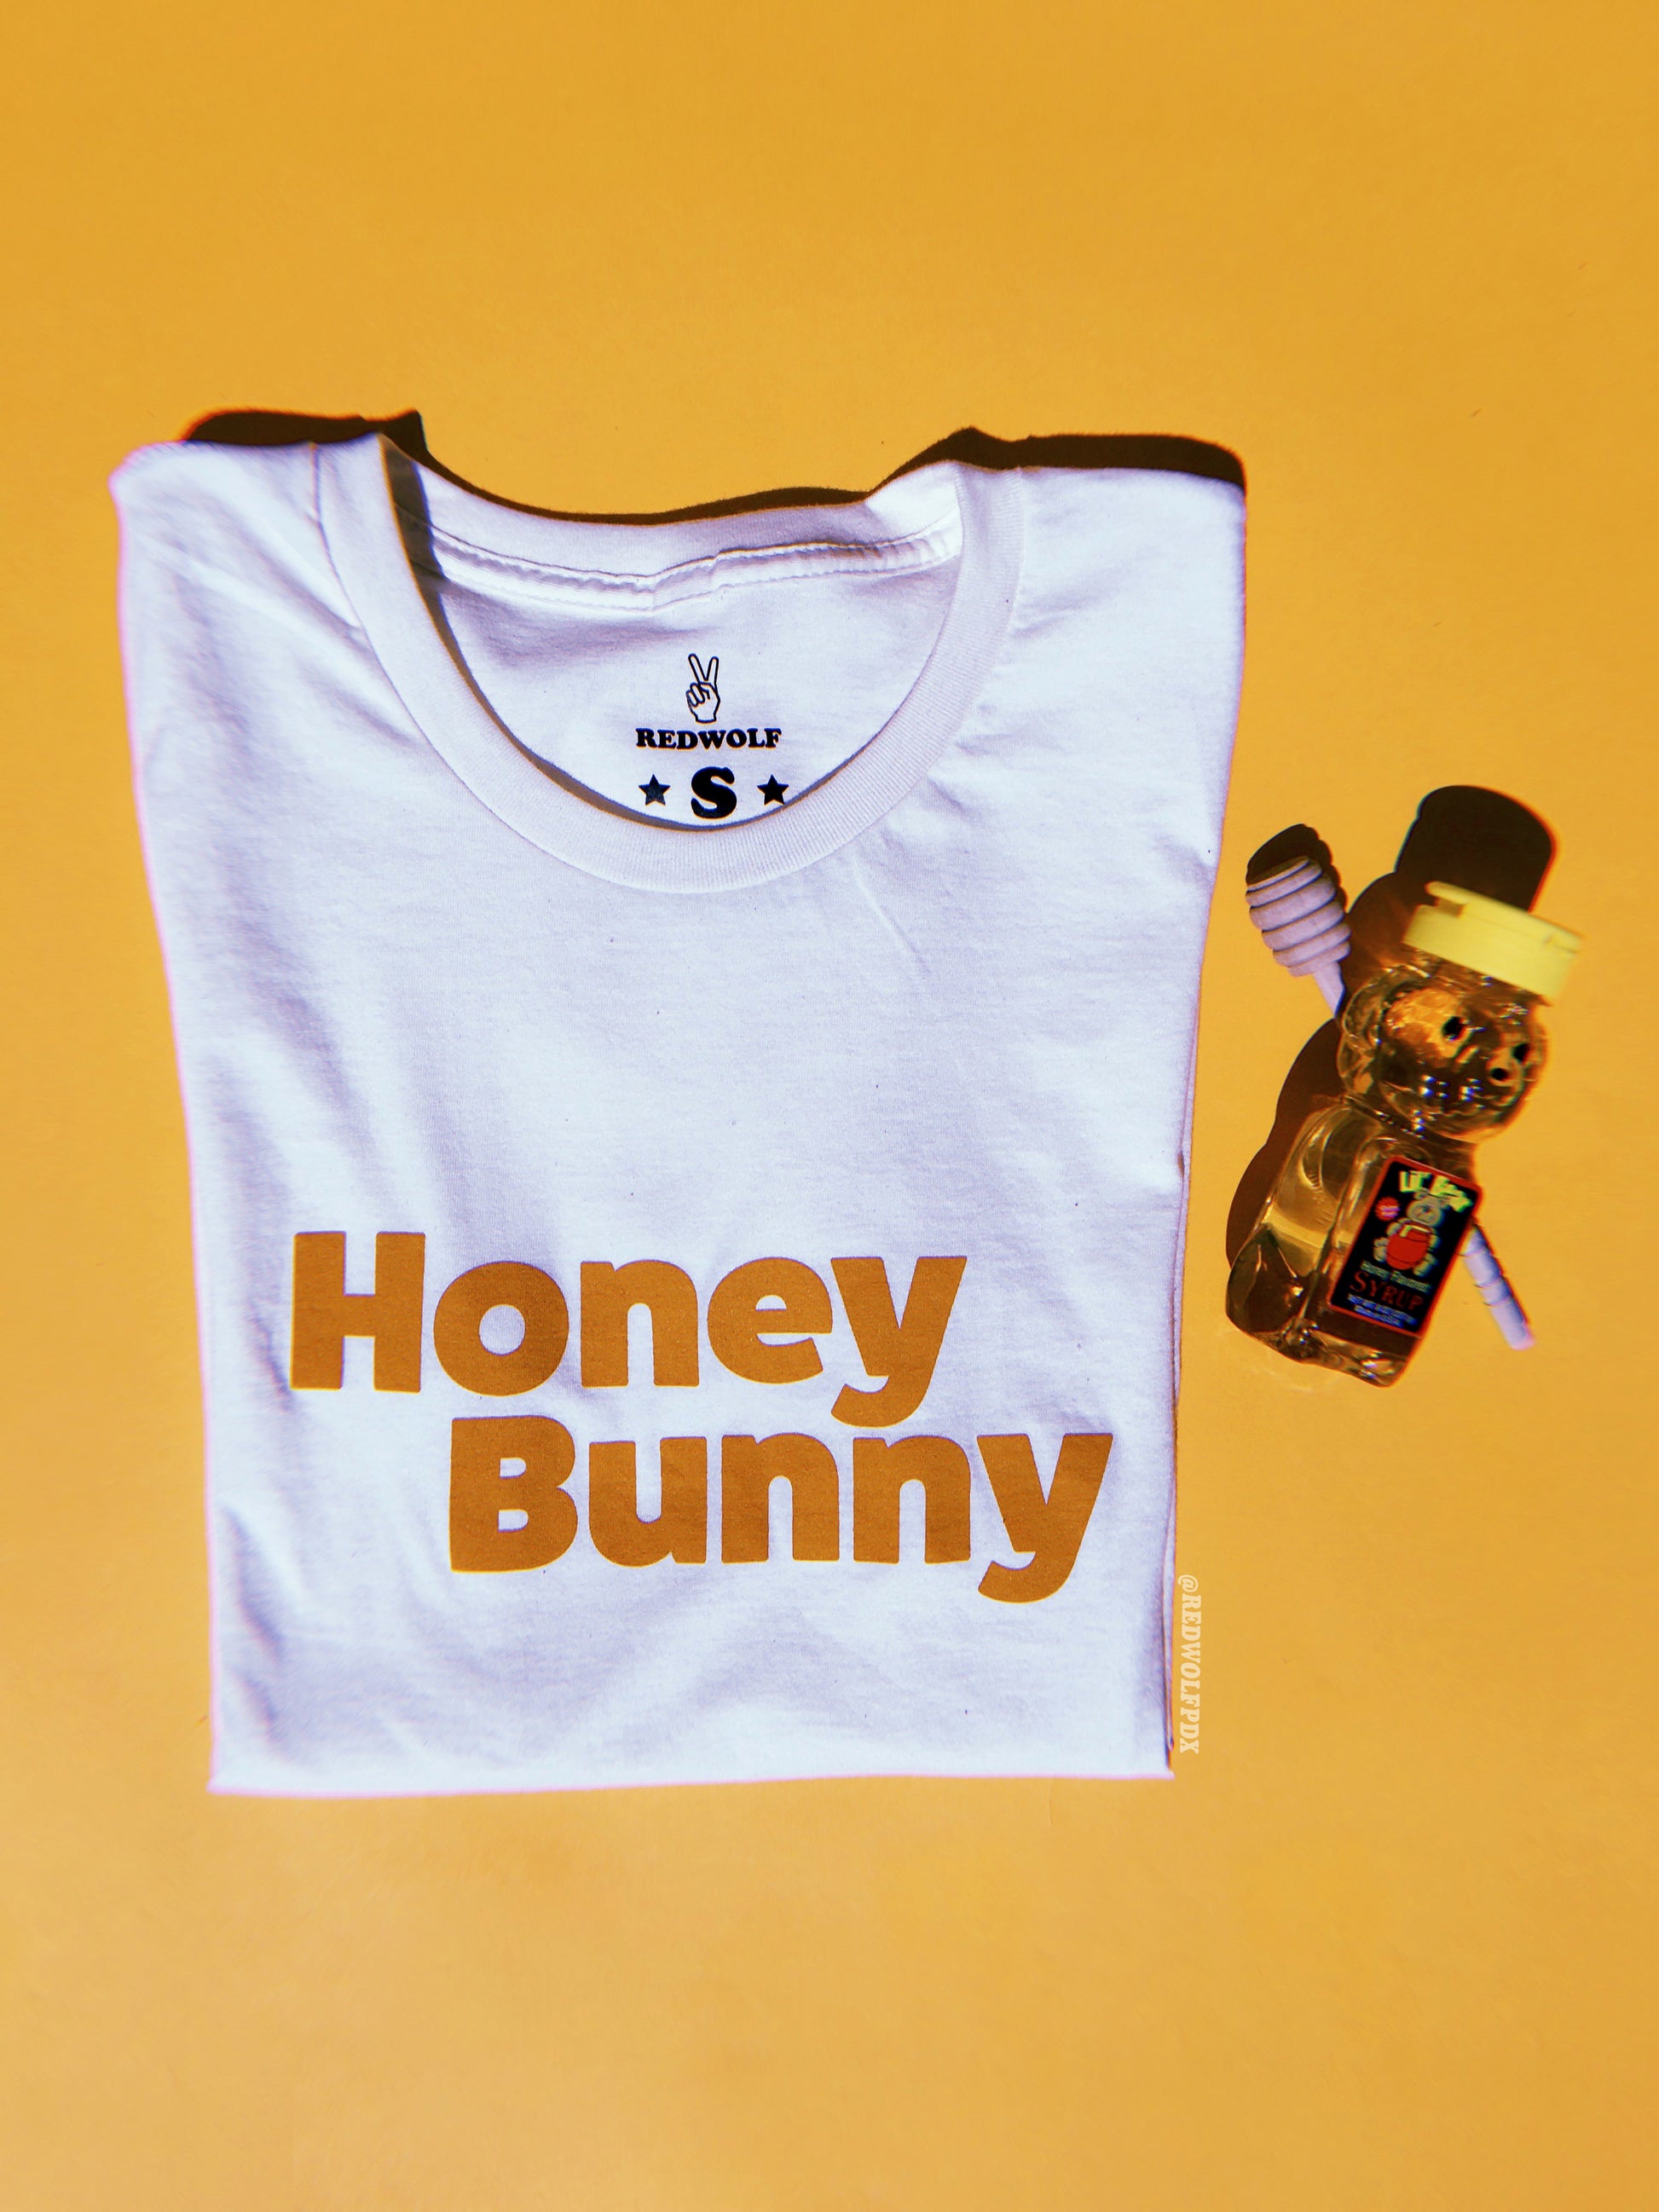   - Honey Bunny Tee - REDWOLF